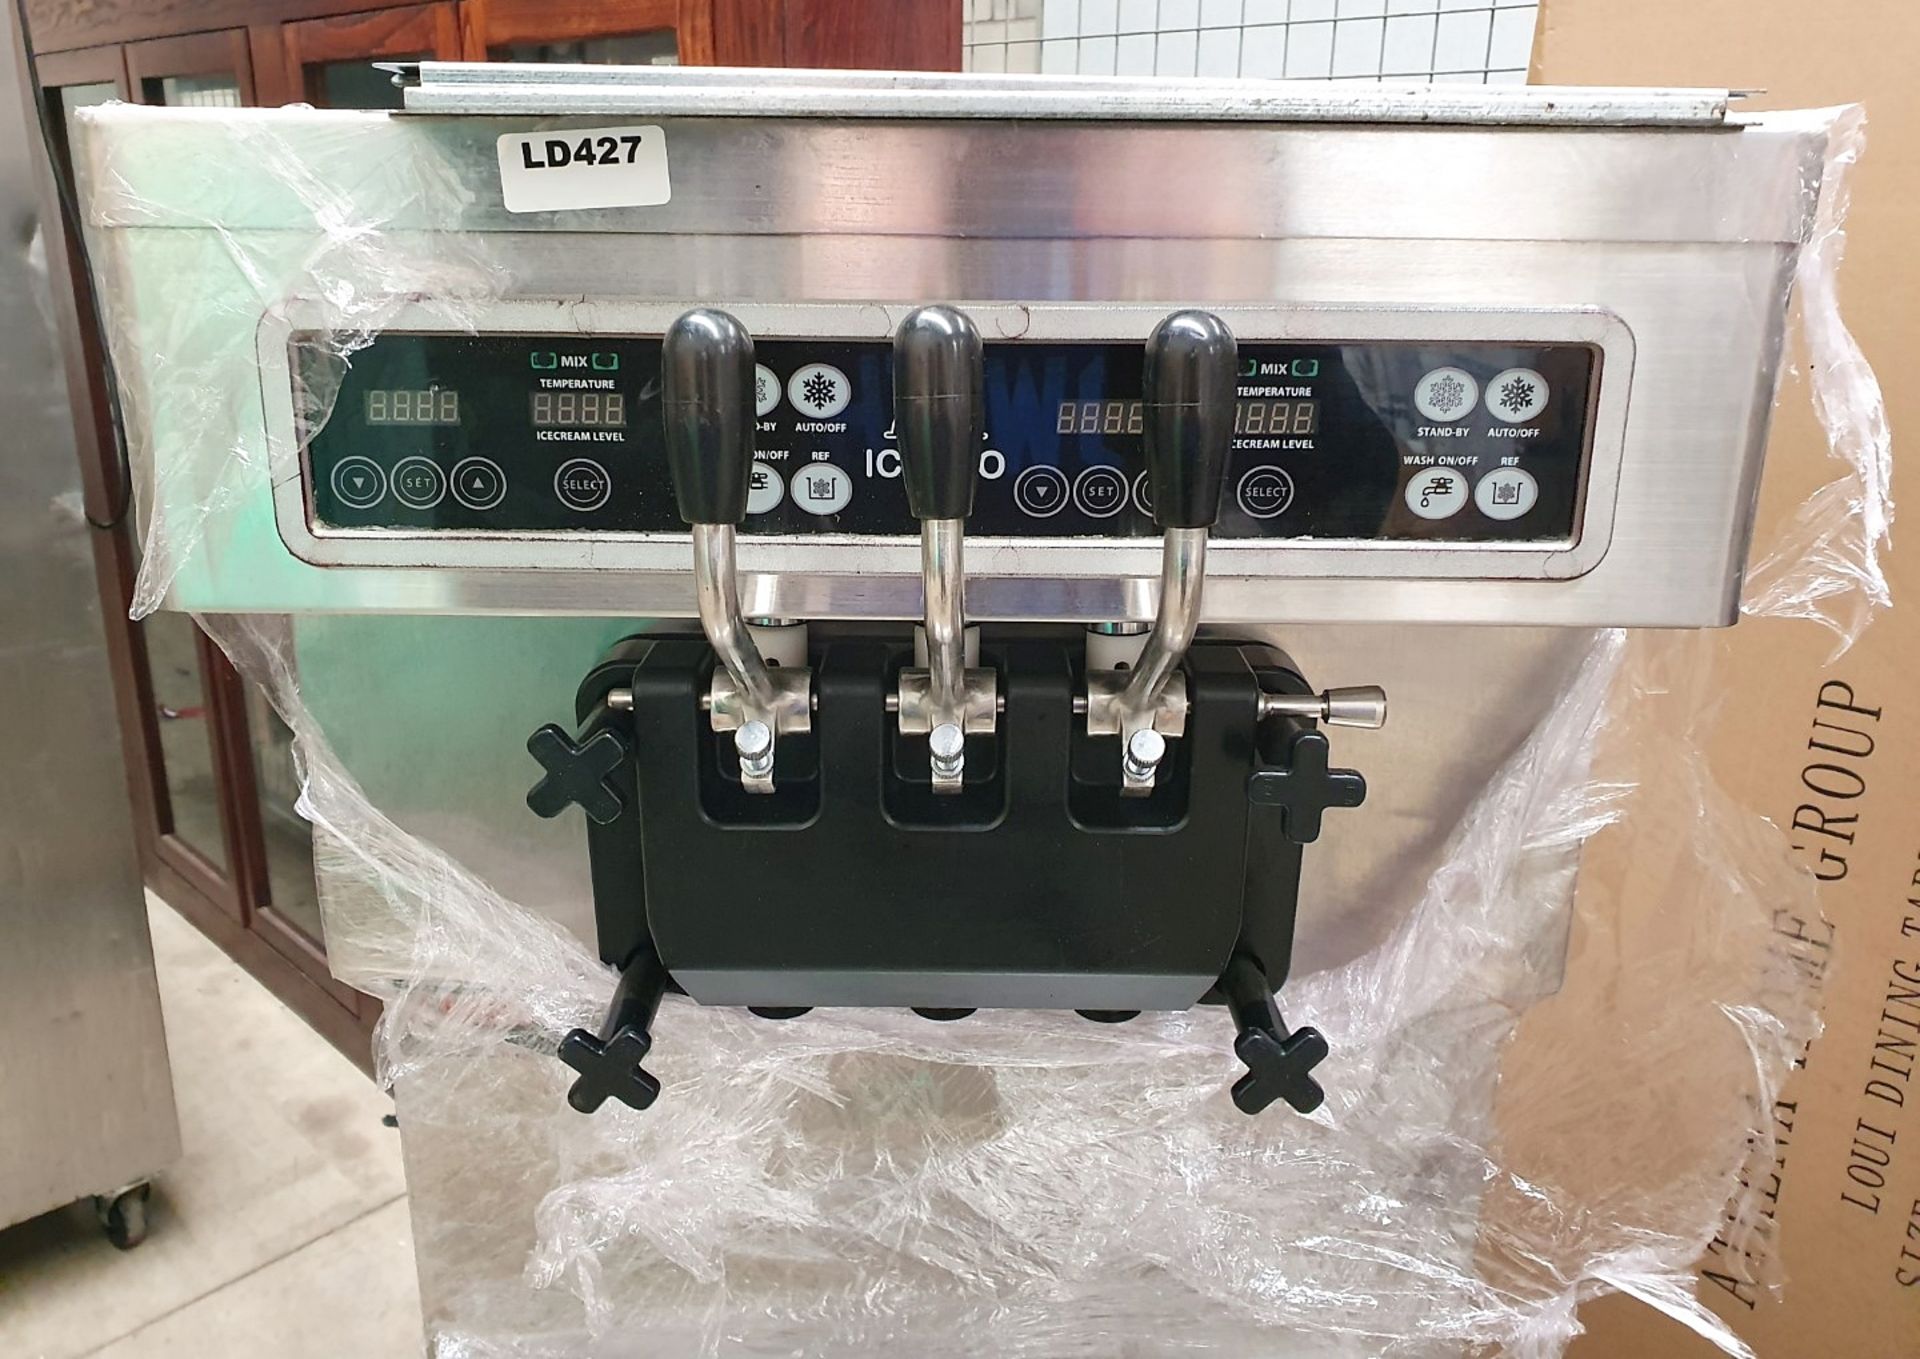 1 x ICETRO Ice Cream Machine - Ref: LD426 - CL350 - Location: Altrincham WA14 - Image 12 of 12